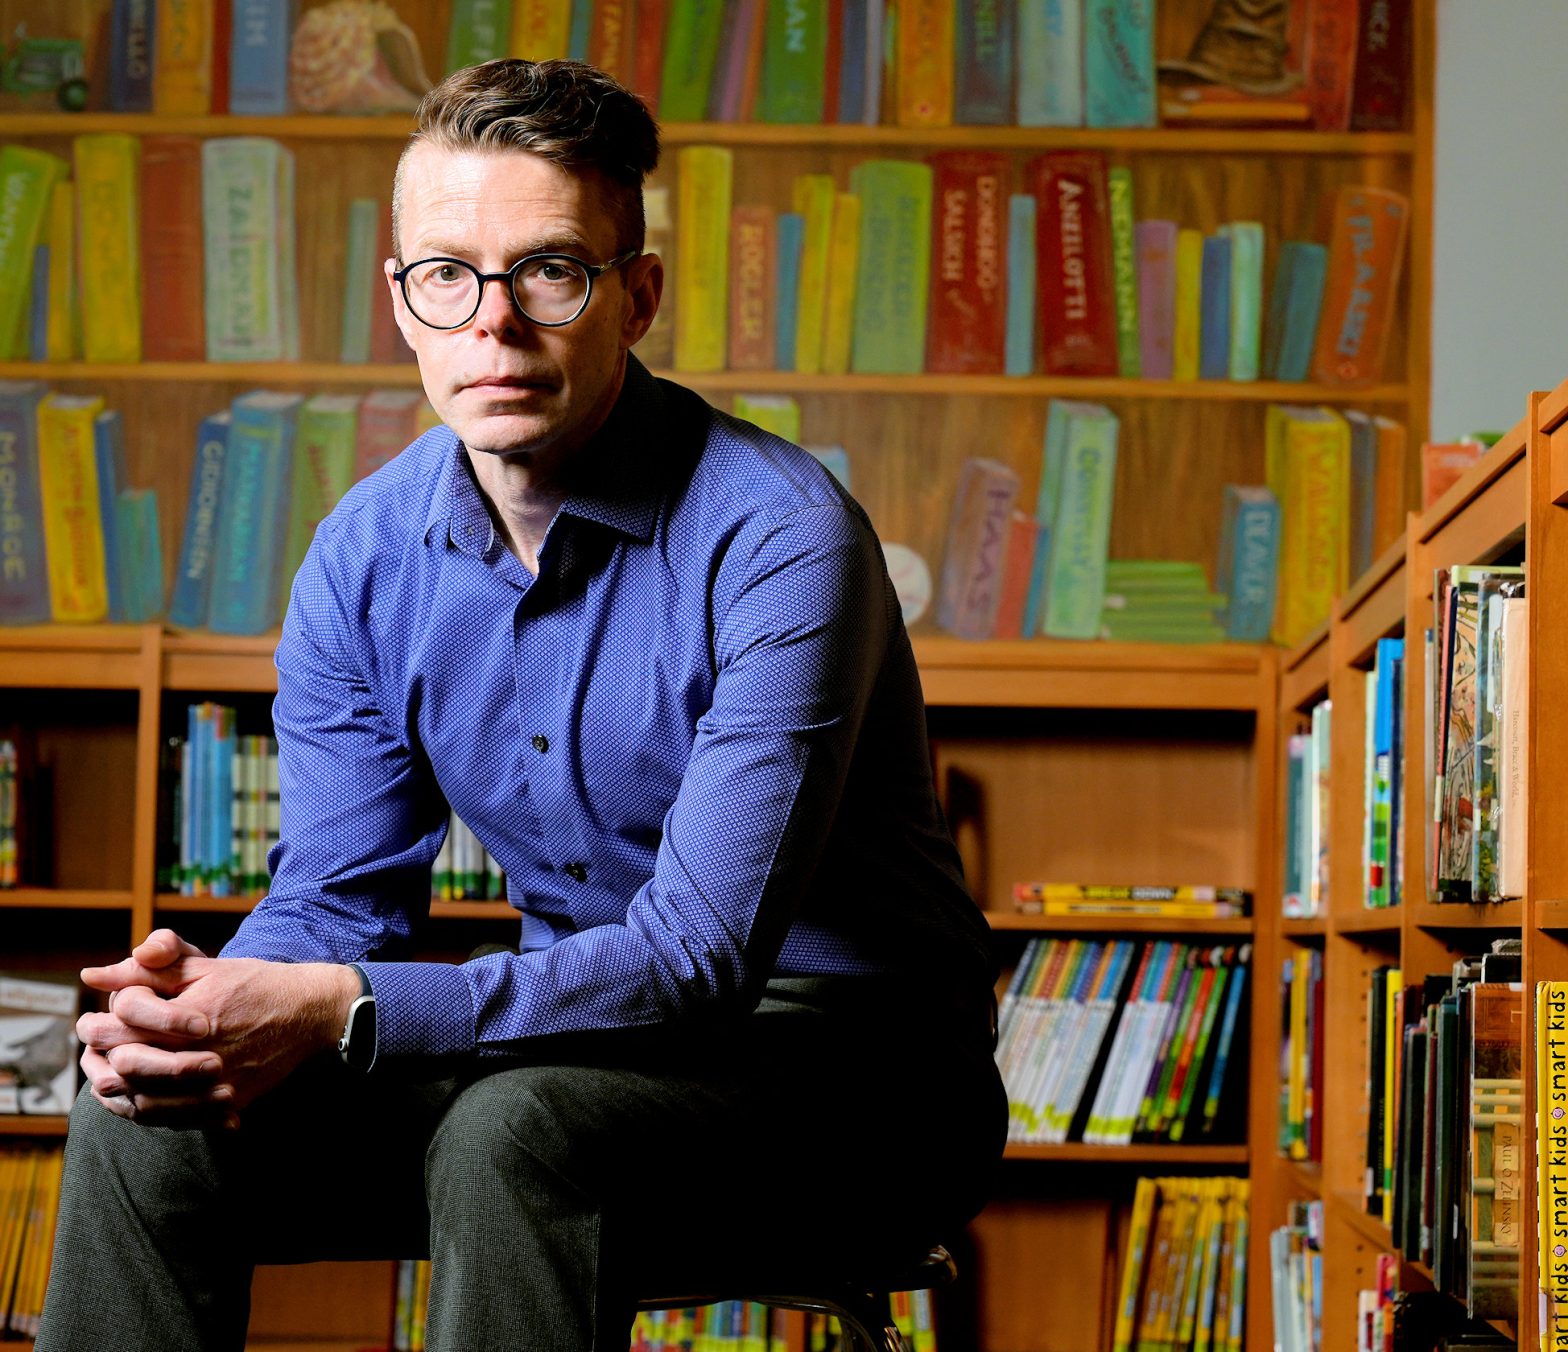 Librarians Fear New Penalties, Even Prison, as Activists Challenge Books